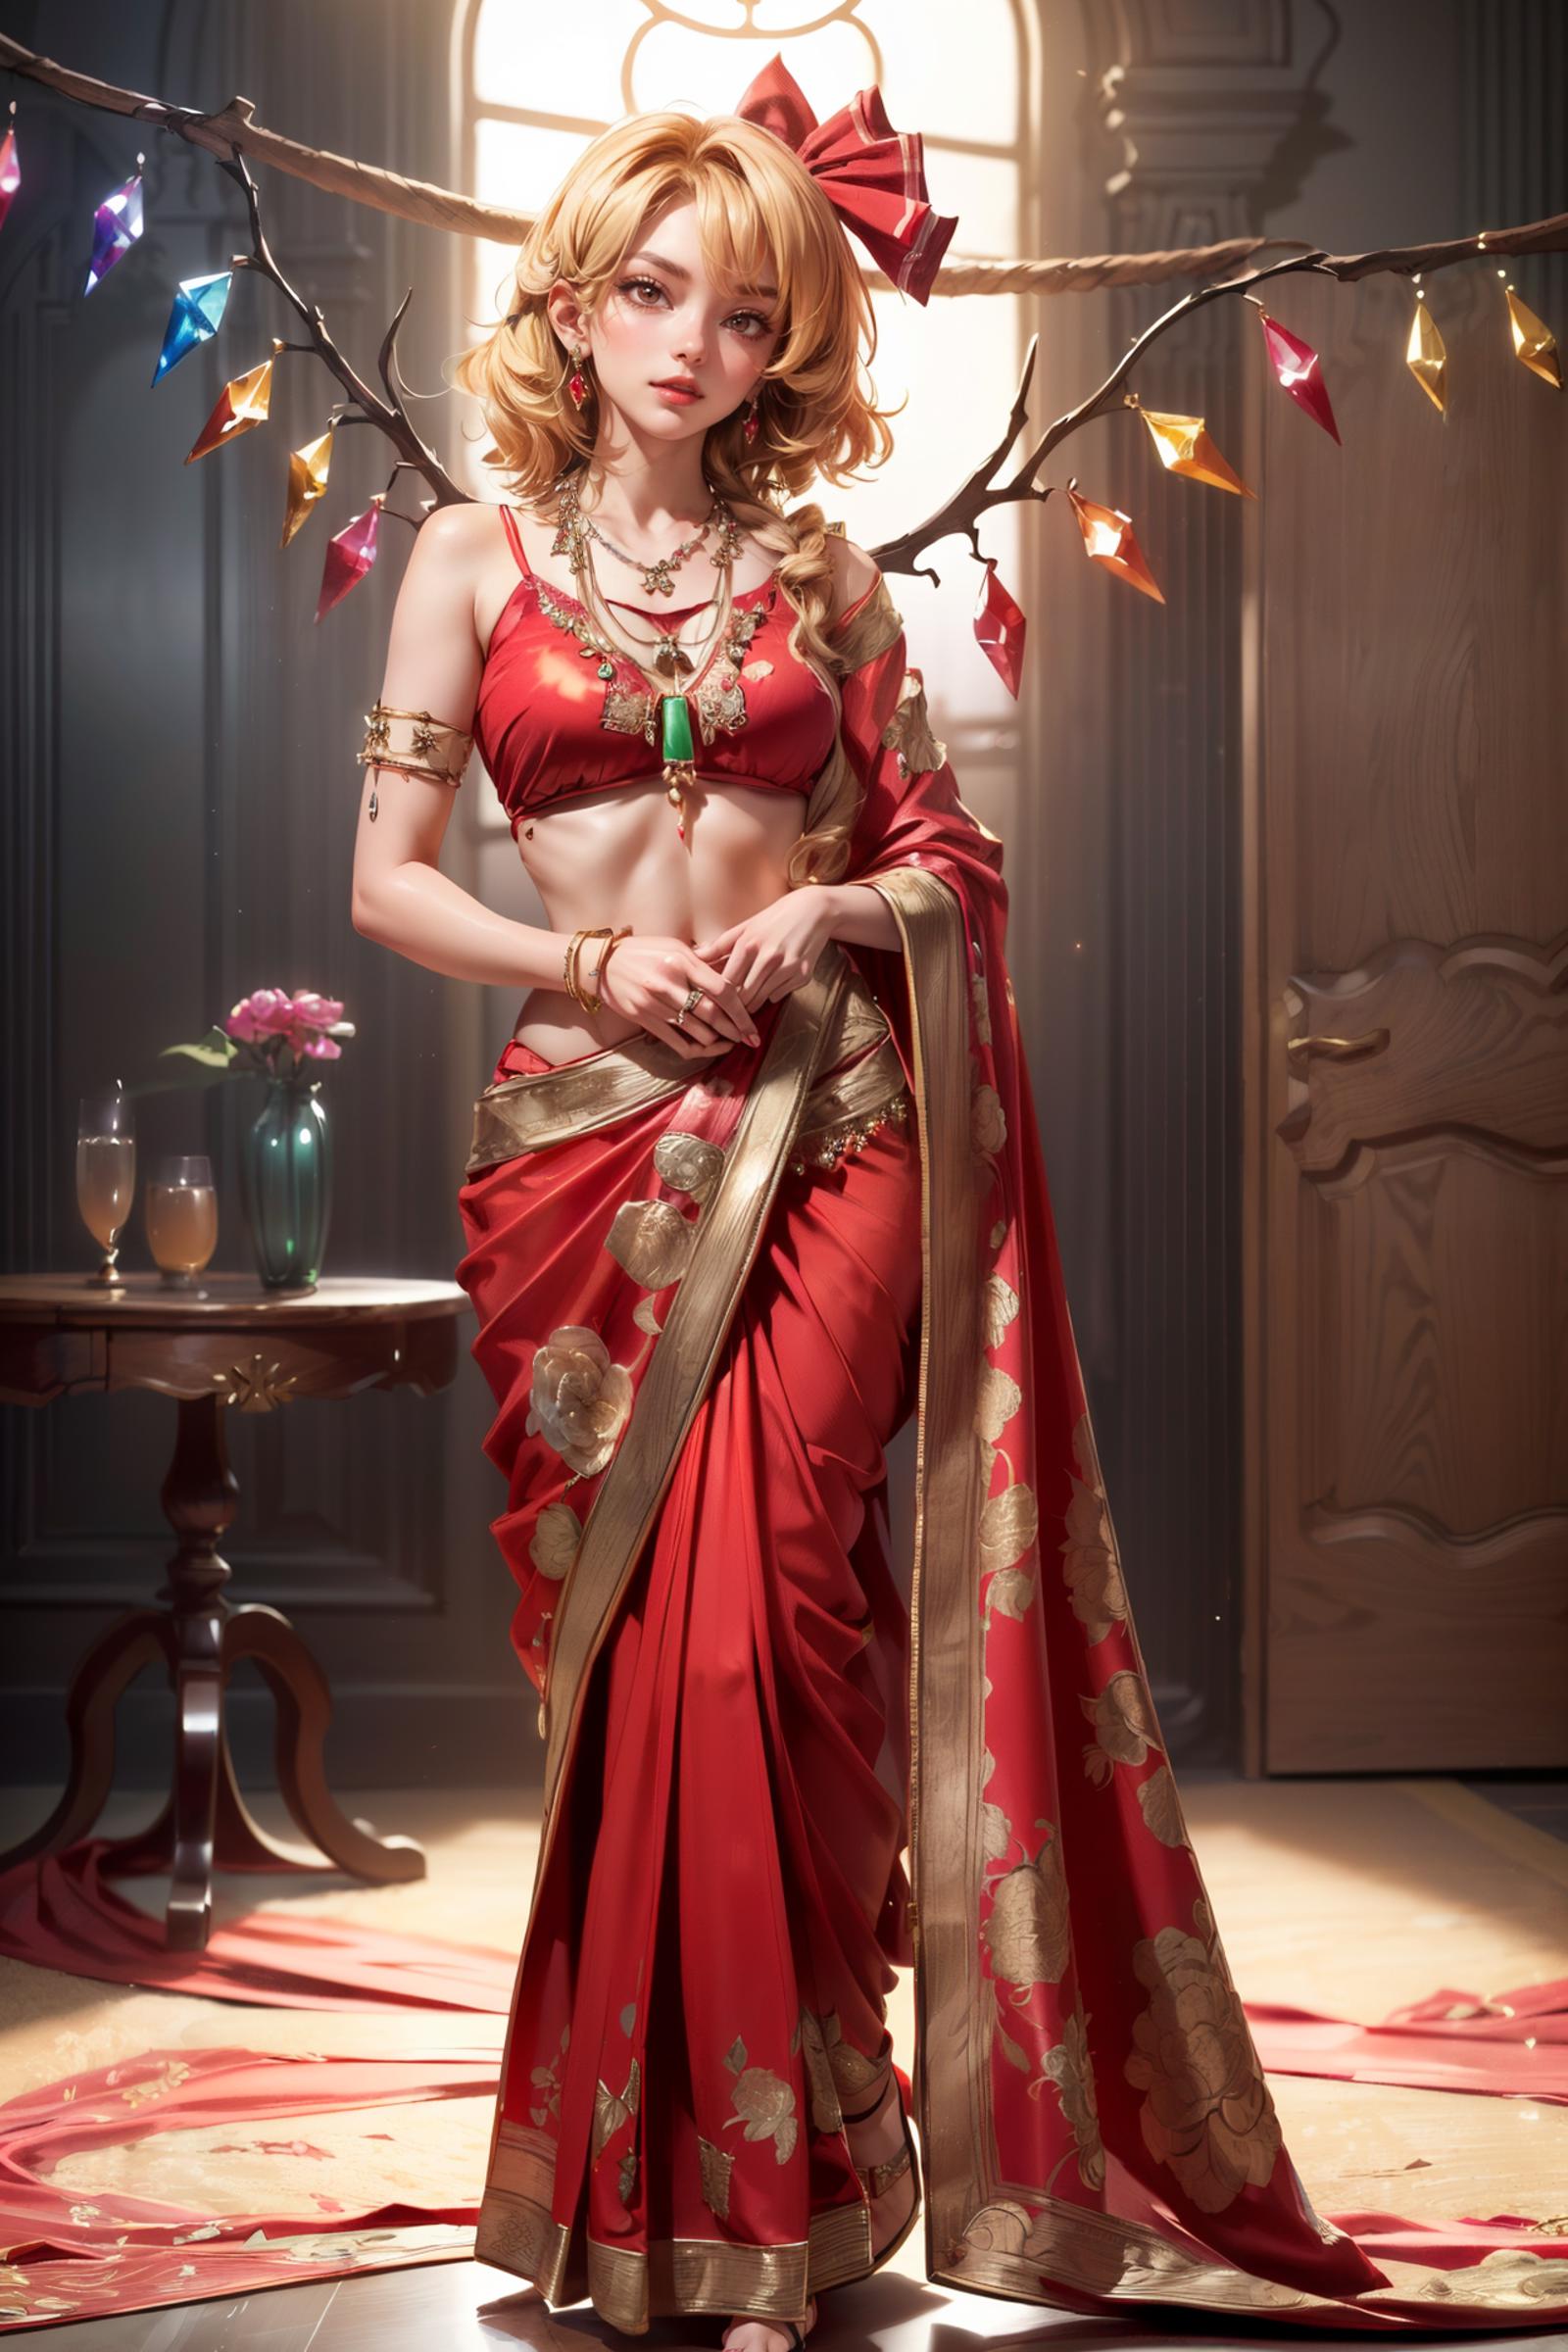 (flandre_scarlet : 1.5), ((touhou, red saree, bindi, jewelry, necklace, cinematography, chiaroscuro, feminine, exotic beau...